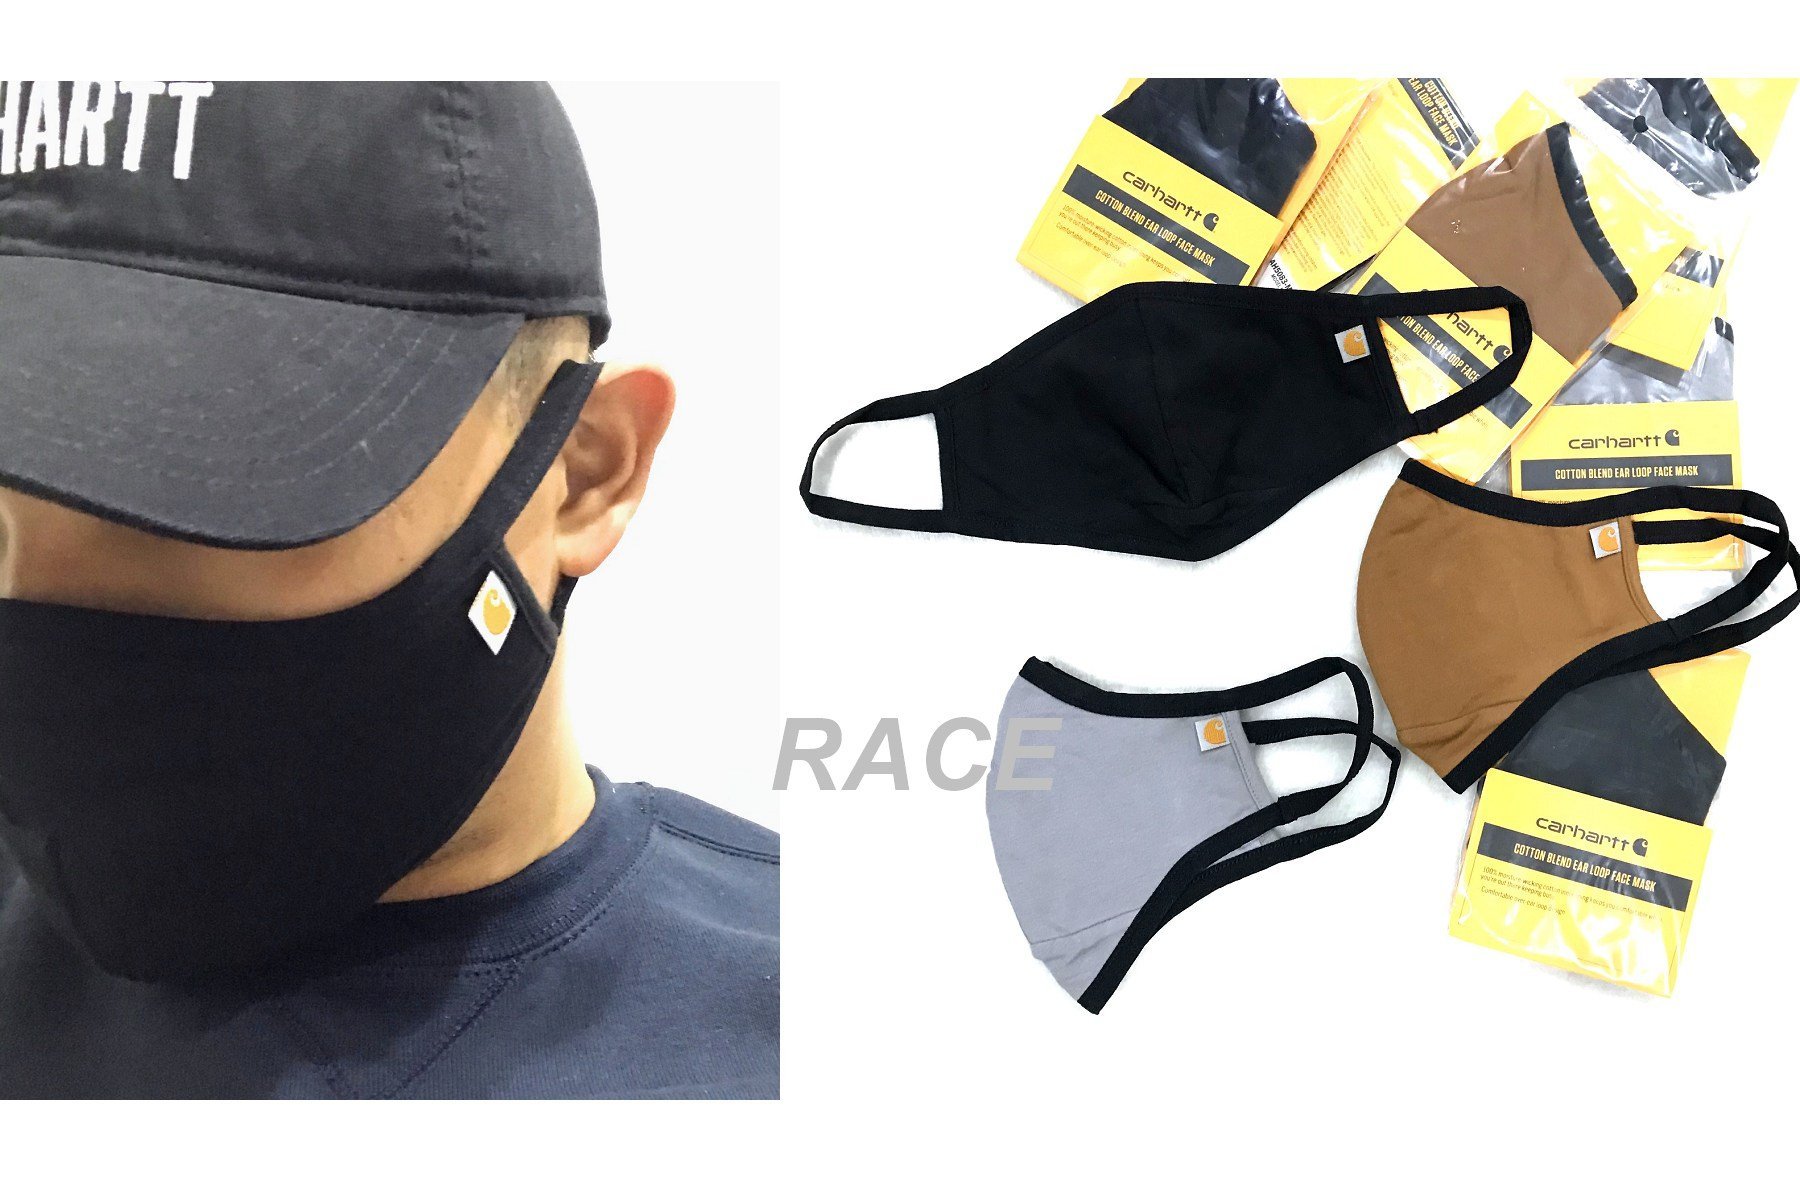 【RACE】CARHARTT COTTON FACE MASK 口罩 布口罩 非醫療用 棉質 工裝 黑 土黃 灰